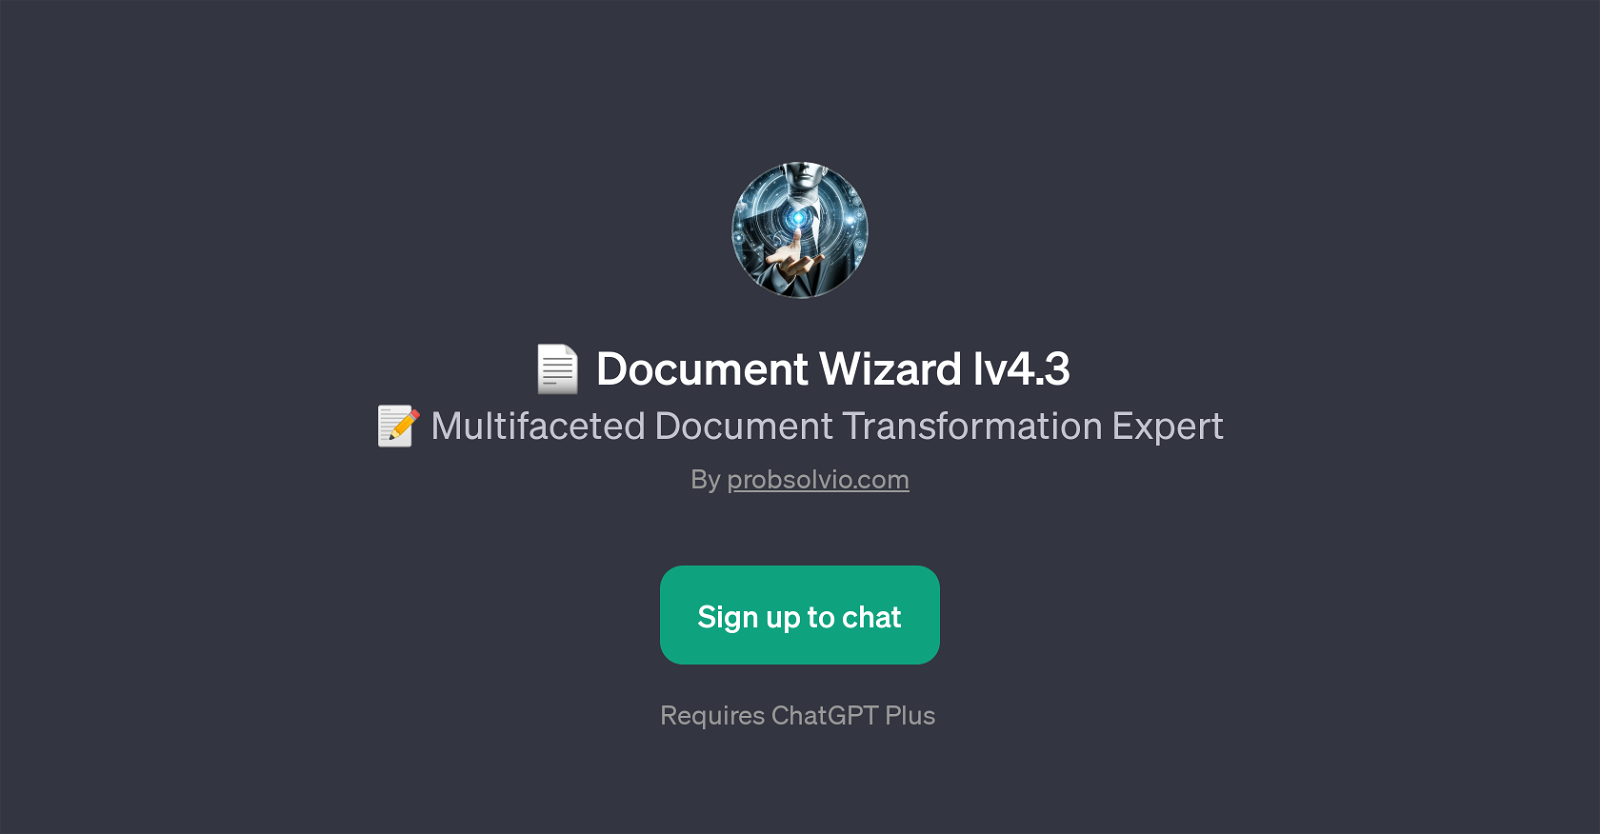 Document Wizard lv4.3 website